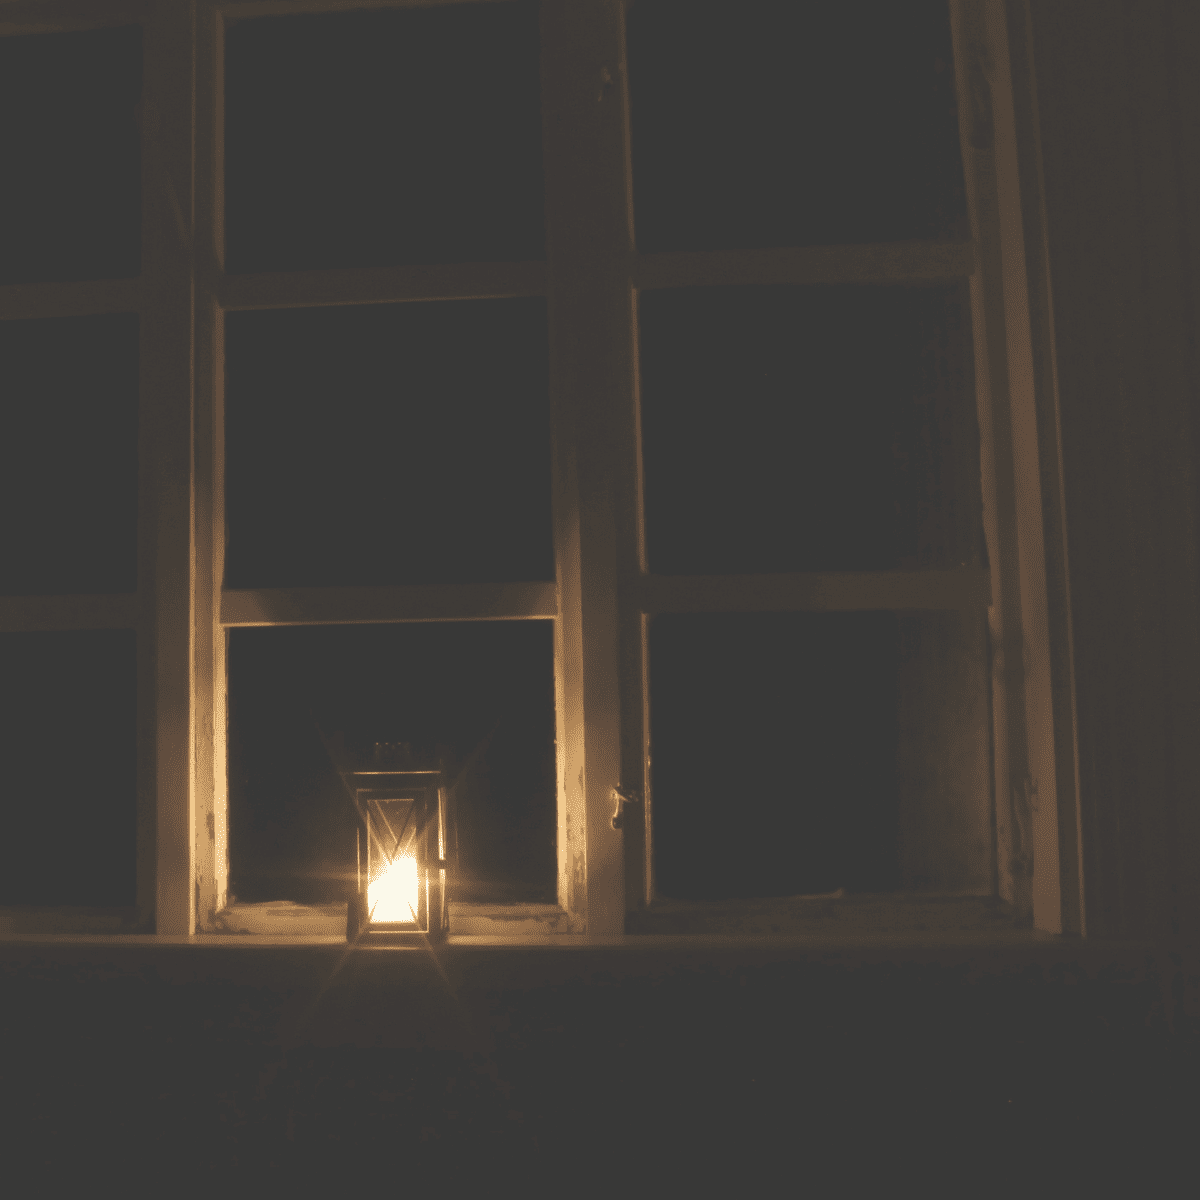 Lit candle shining bright on a window edge on a dark winter night.